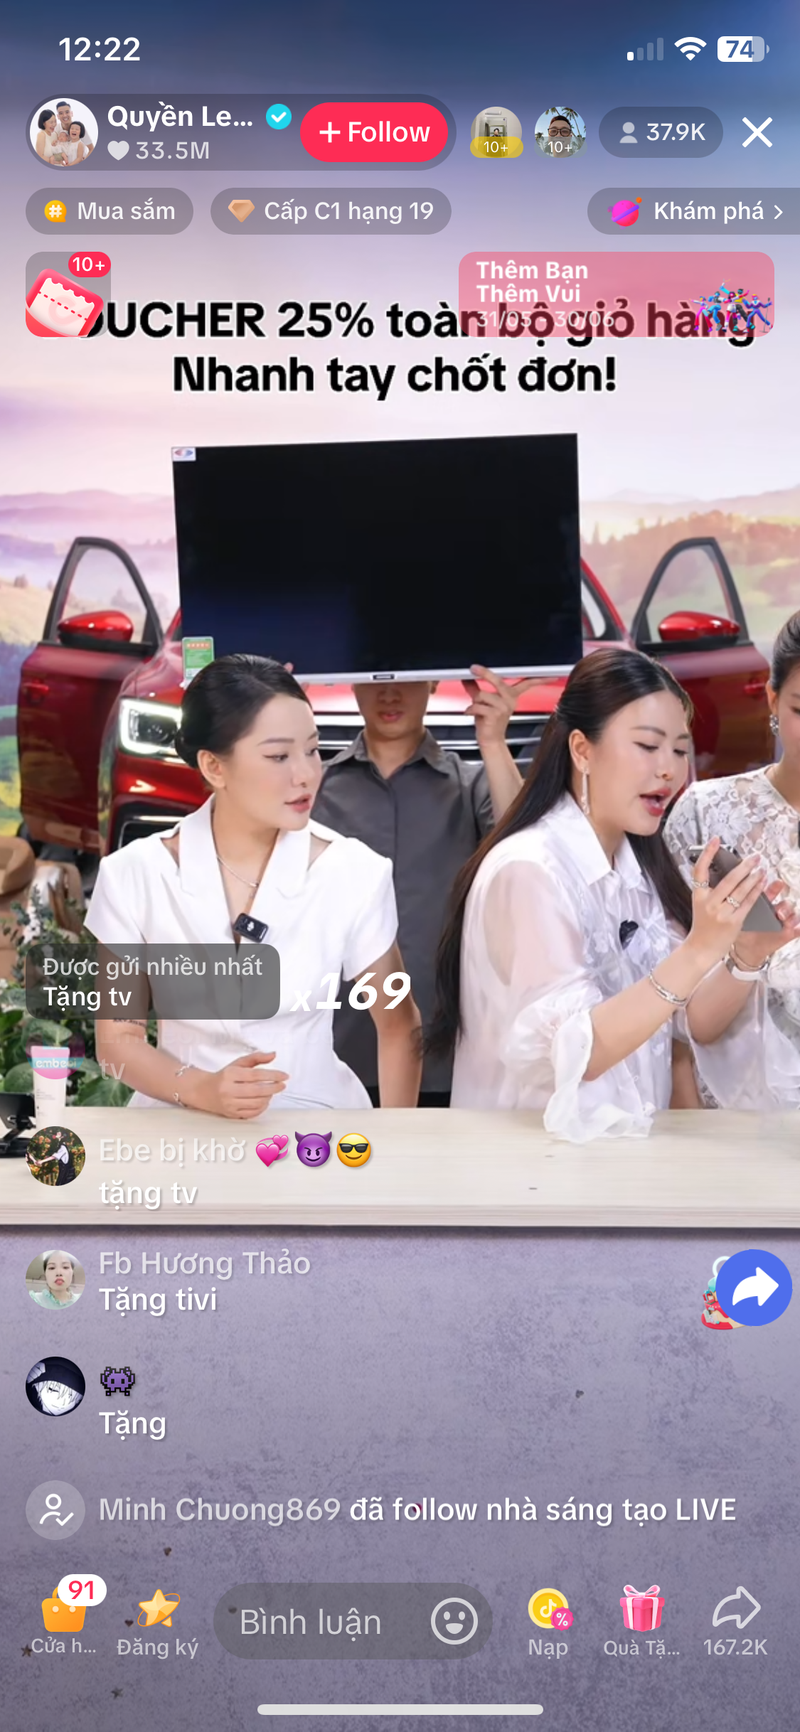 Xuat hoa don chong that thu thue livestream ban hang